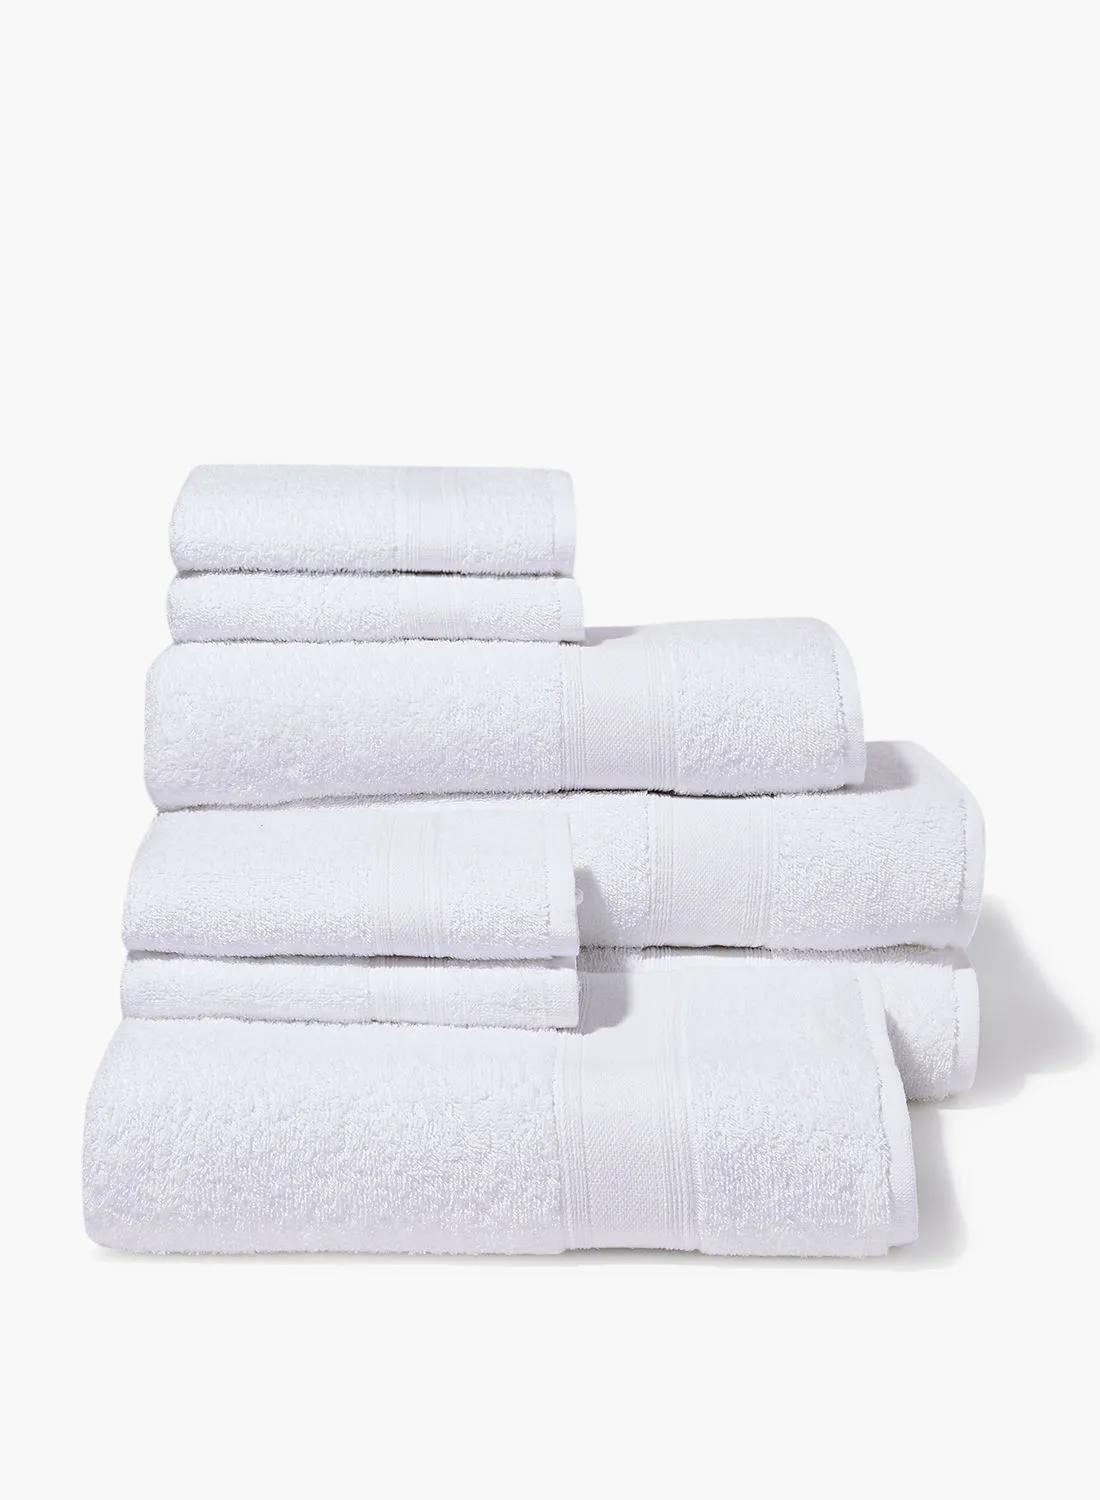 Amal 8 Piece Bathroom Towel Set - 400 GSM 100% Cotton Terry - 4 Hand Towel - 2 Face Towel - 2 Bath Towel - White Color -Quick Dry - Super Absorbent